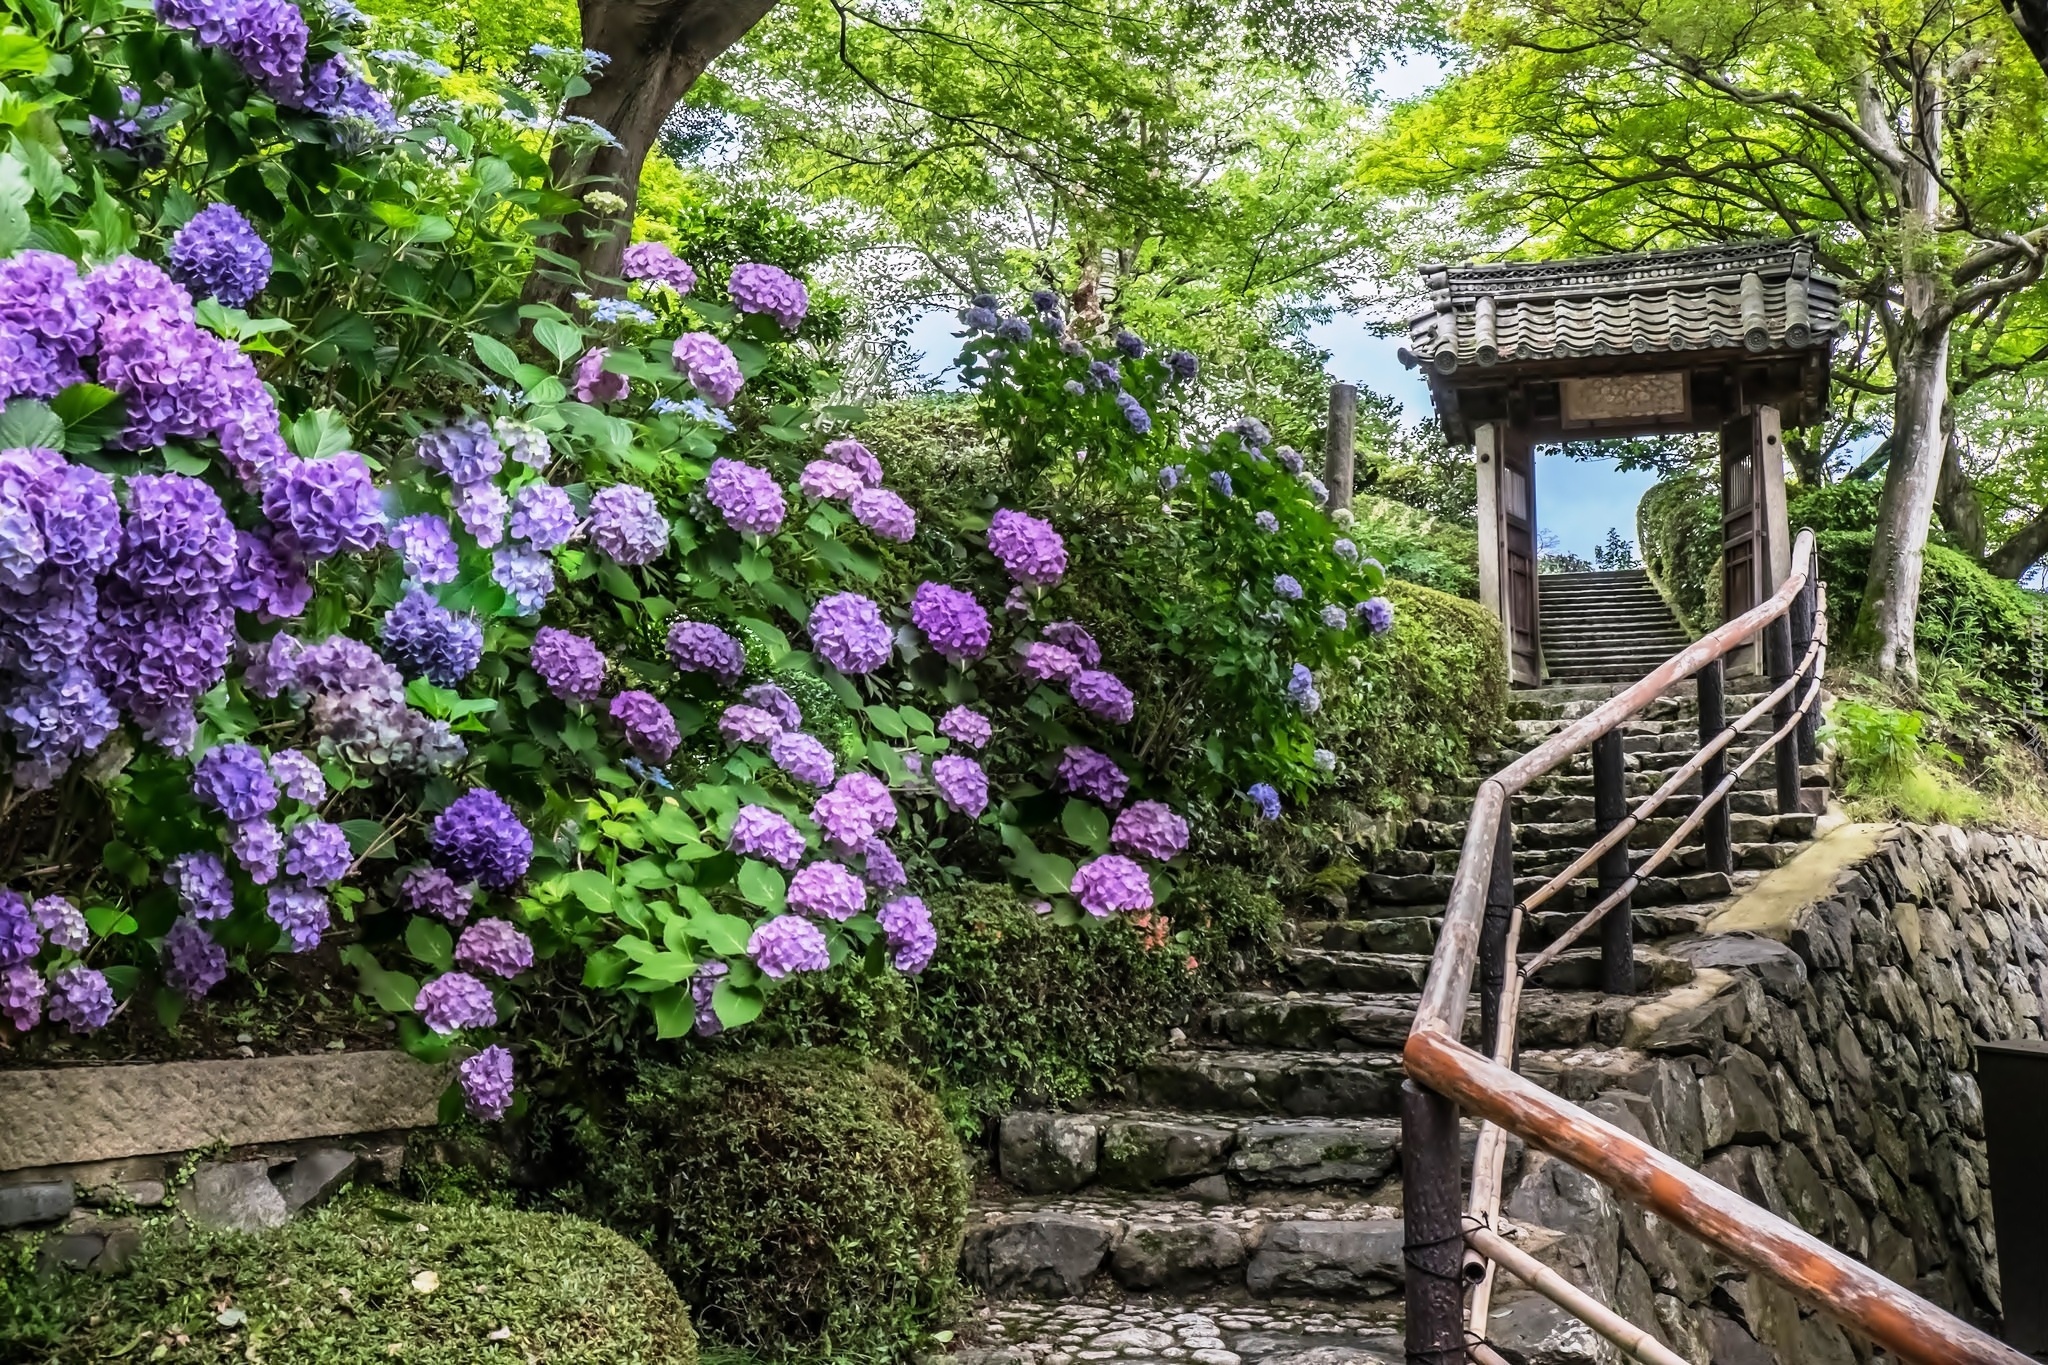 Ogród, Schody, Hortensja, Japonia